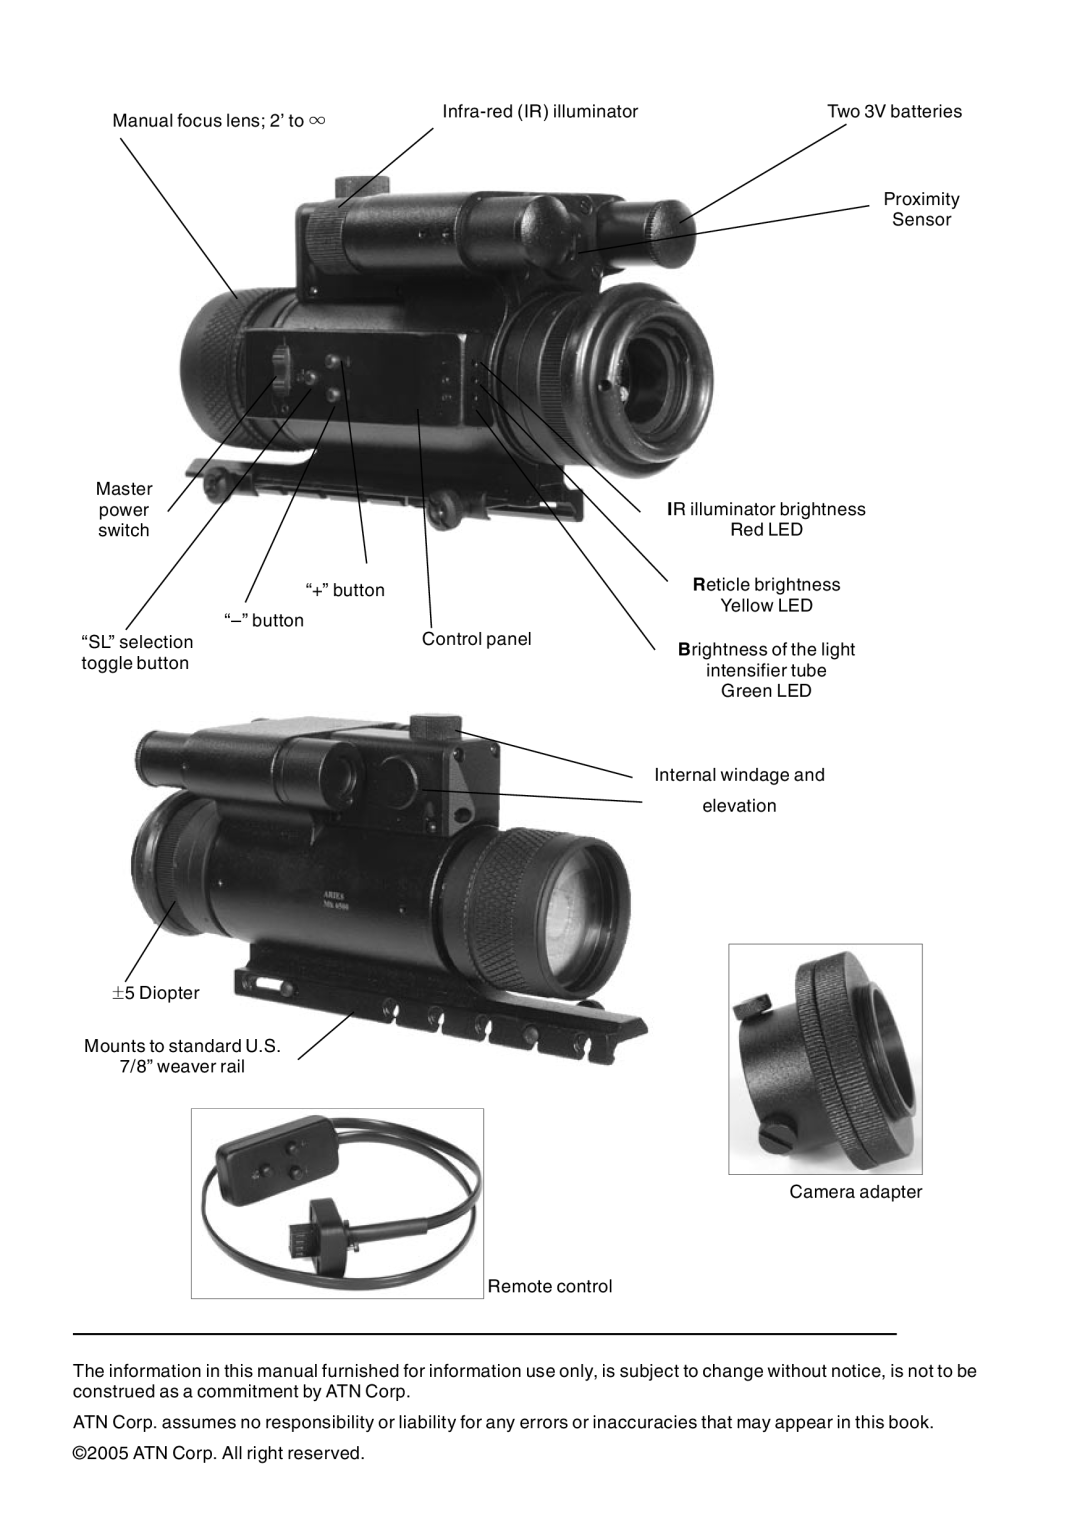 ATN Mk6500 Manual focus lens 2’ to , Infra-redIR illuminator, Two 3V batteries, Proximity Sensor, Master power switch 